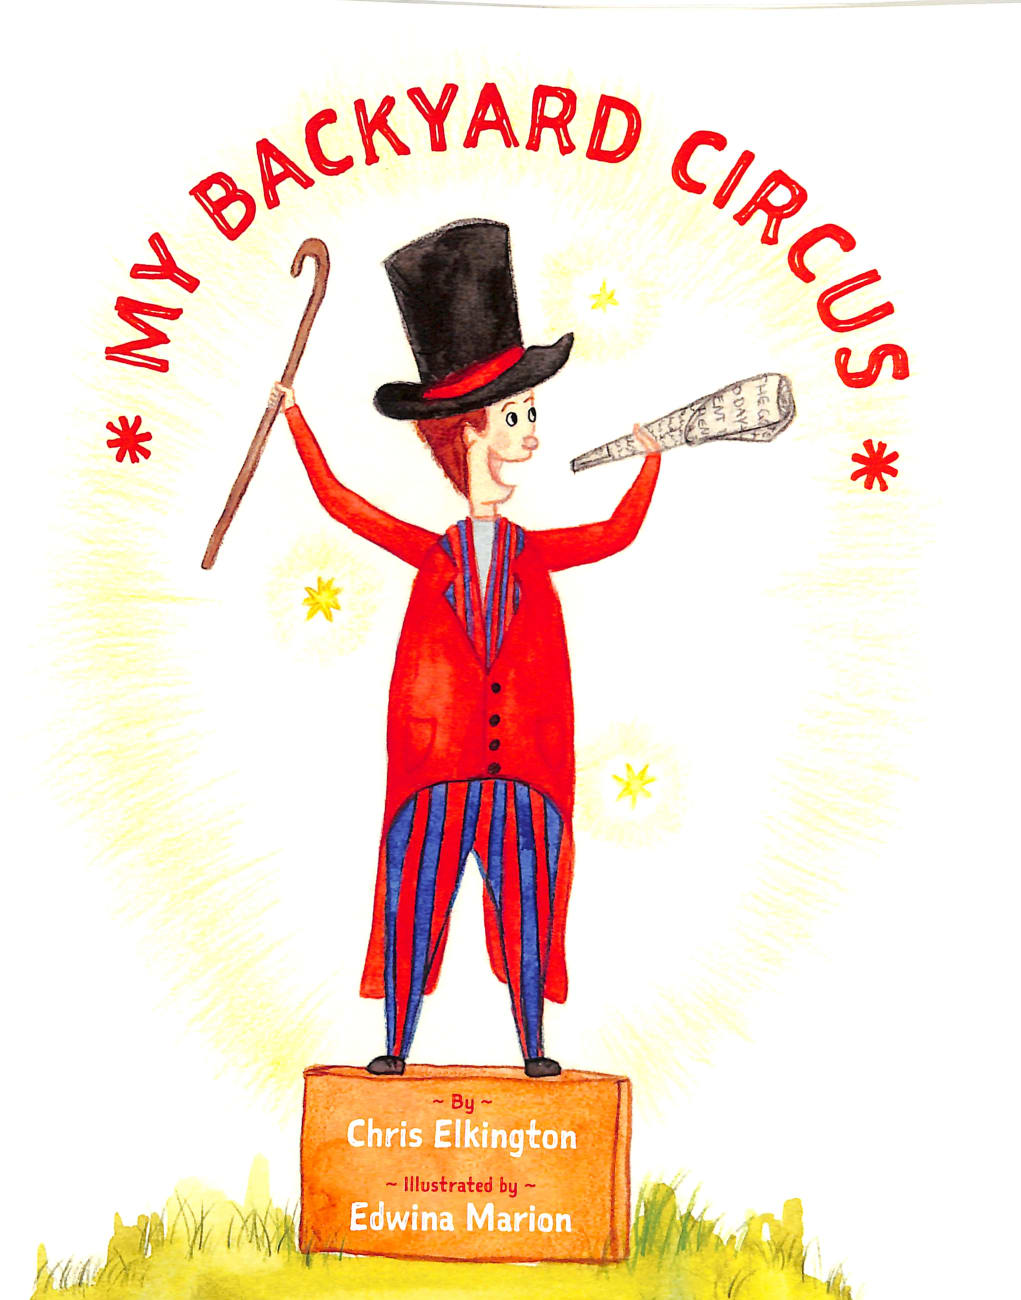 My Backyard Circus Paperback